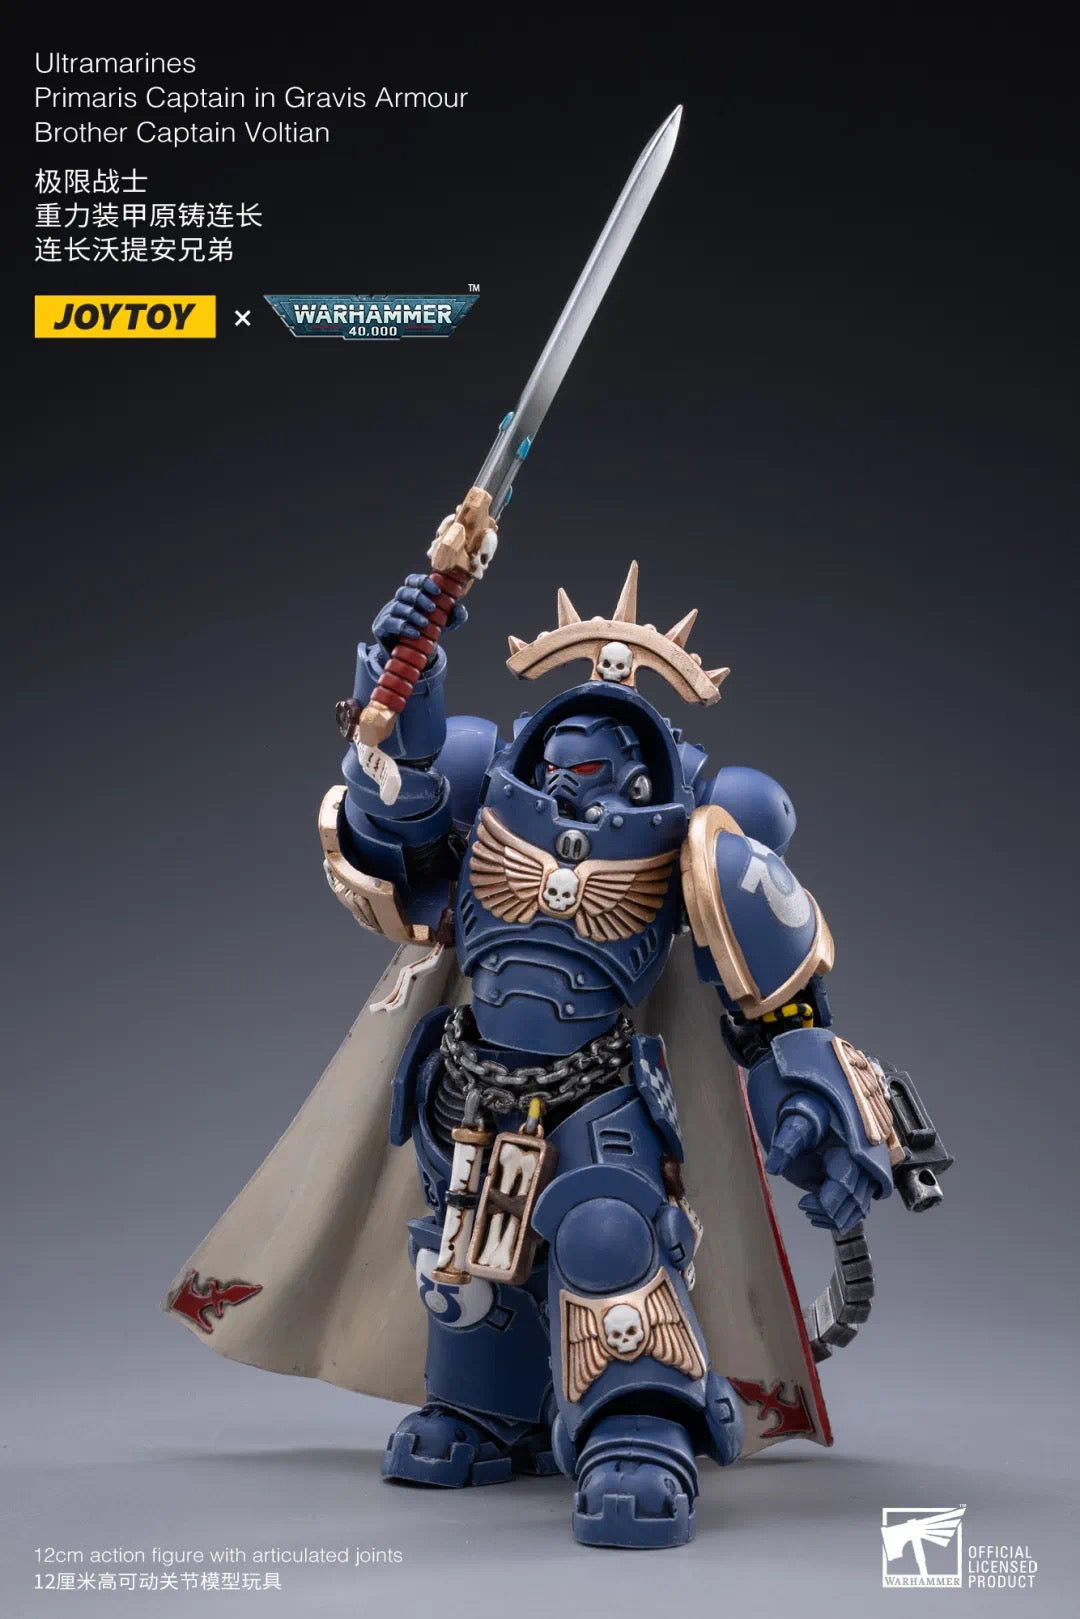 JoyToy 1/18 Warhammer 40K Ultramarines Primaris Captain in Gravis Armour Brother Captain Voltian